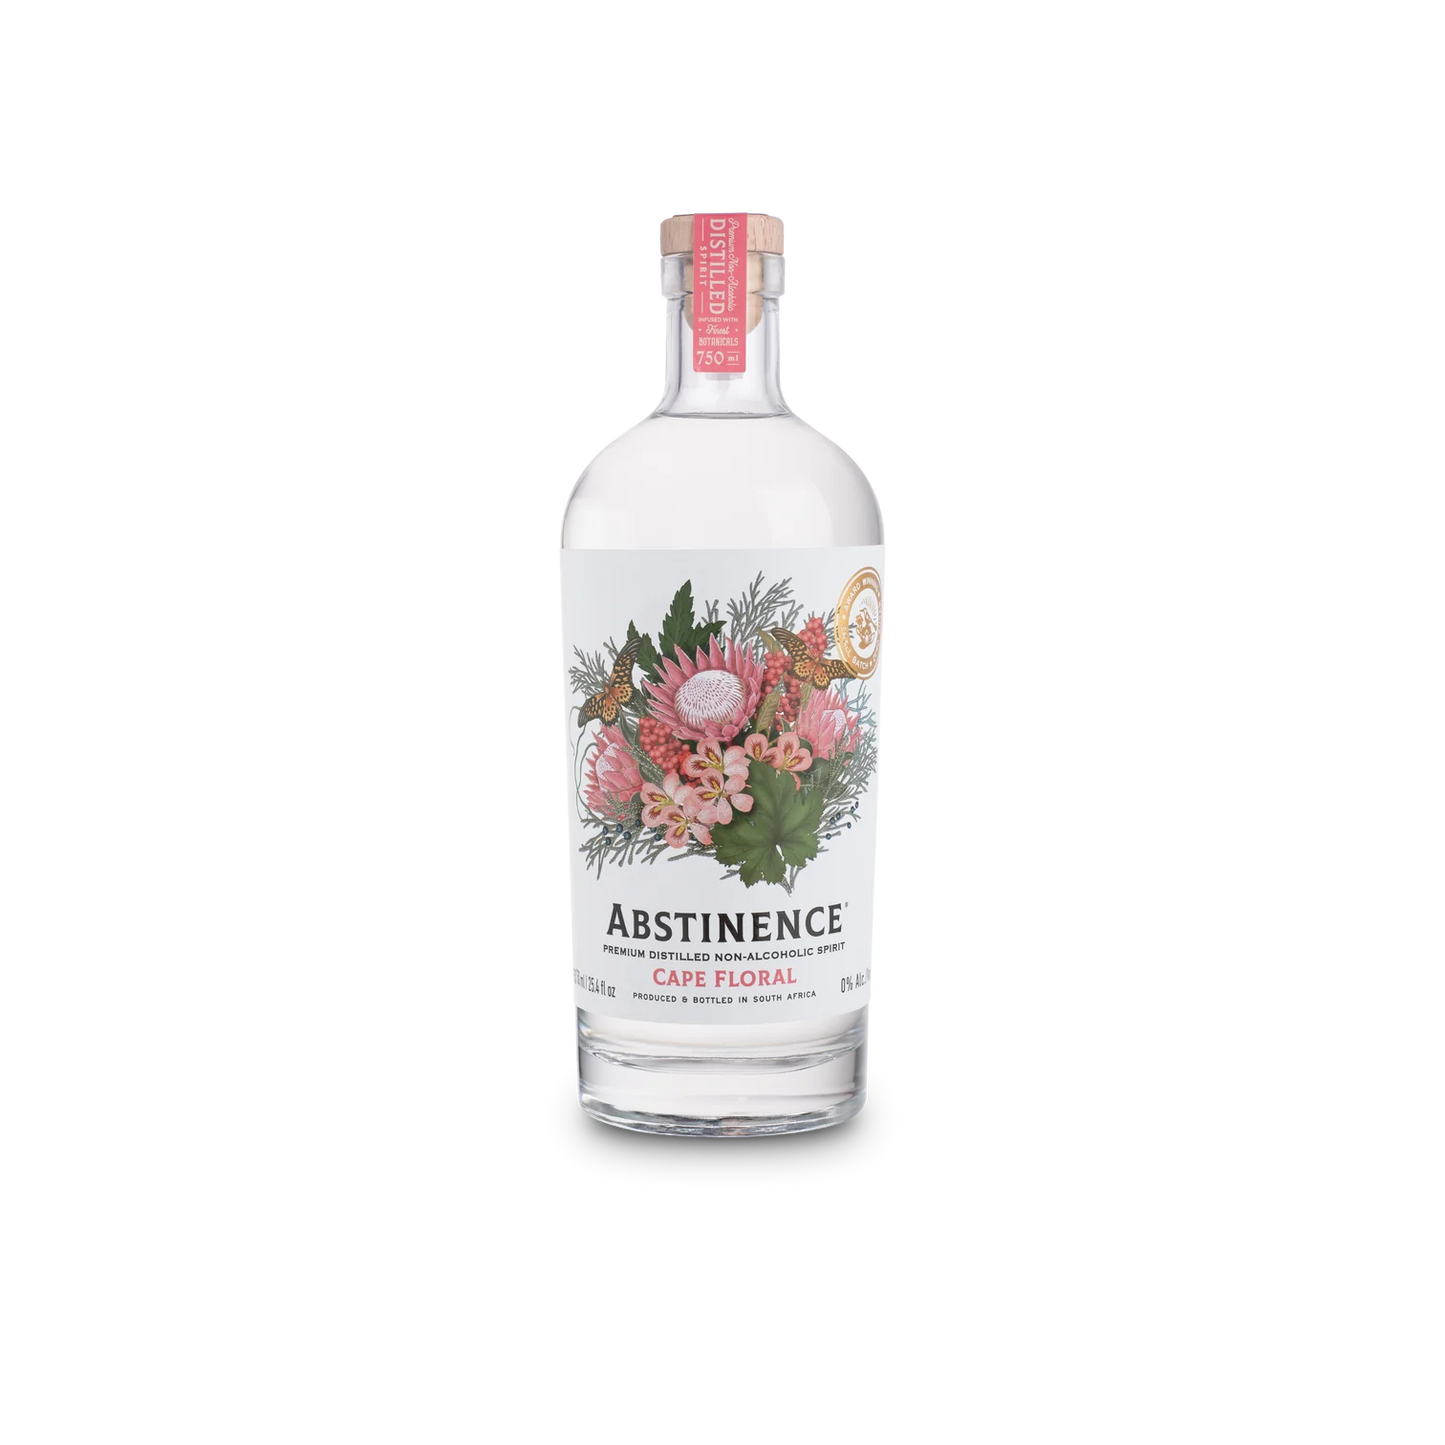 a bottle of abstinence's cape floral spirit